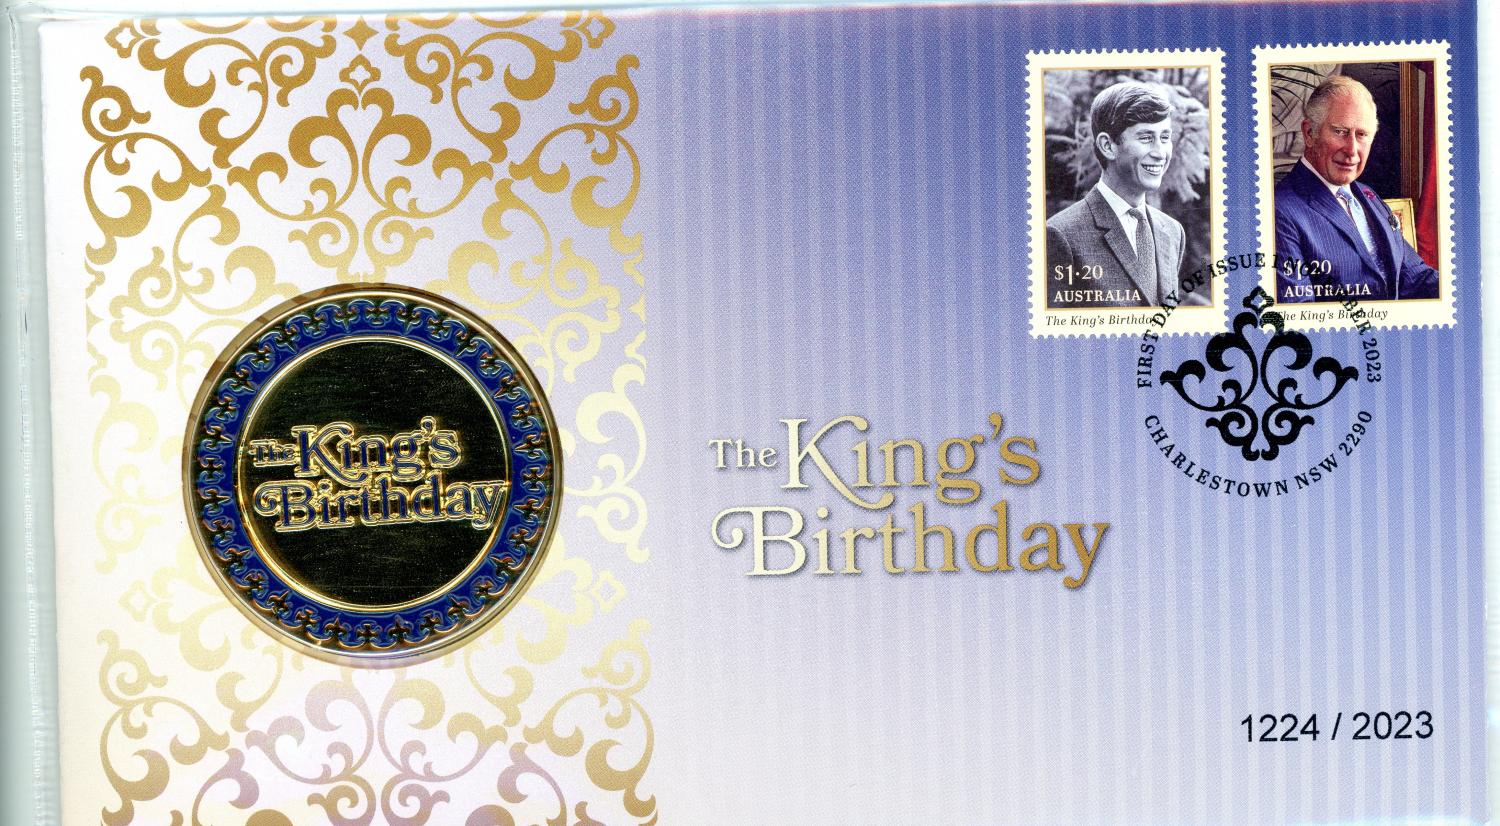 Thumbnail for 2023 The Kings Birthday - King Charles III - Postal Medallion Cover